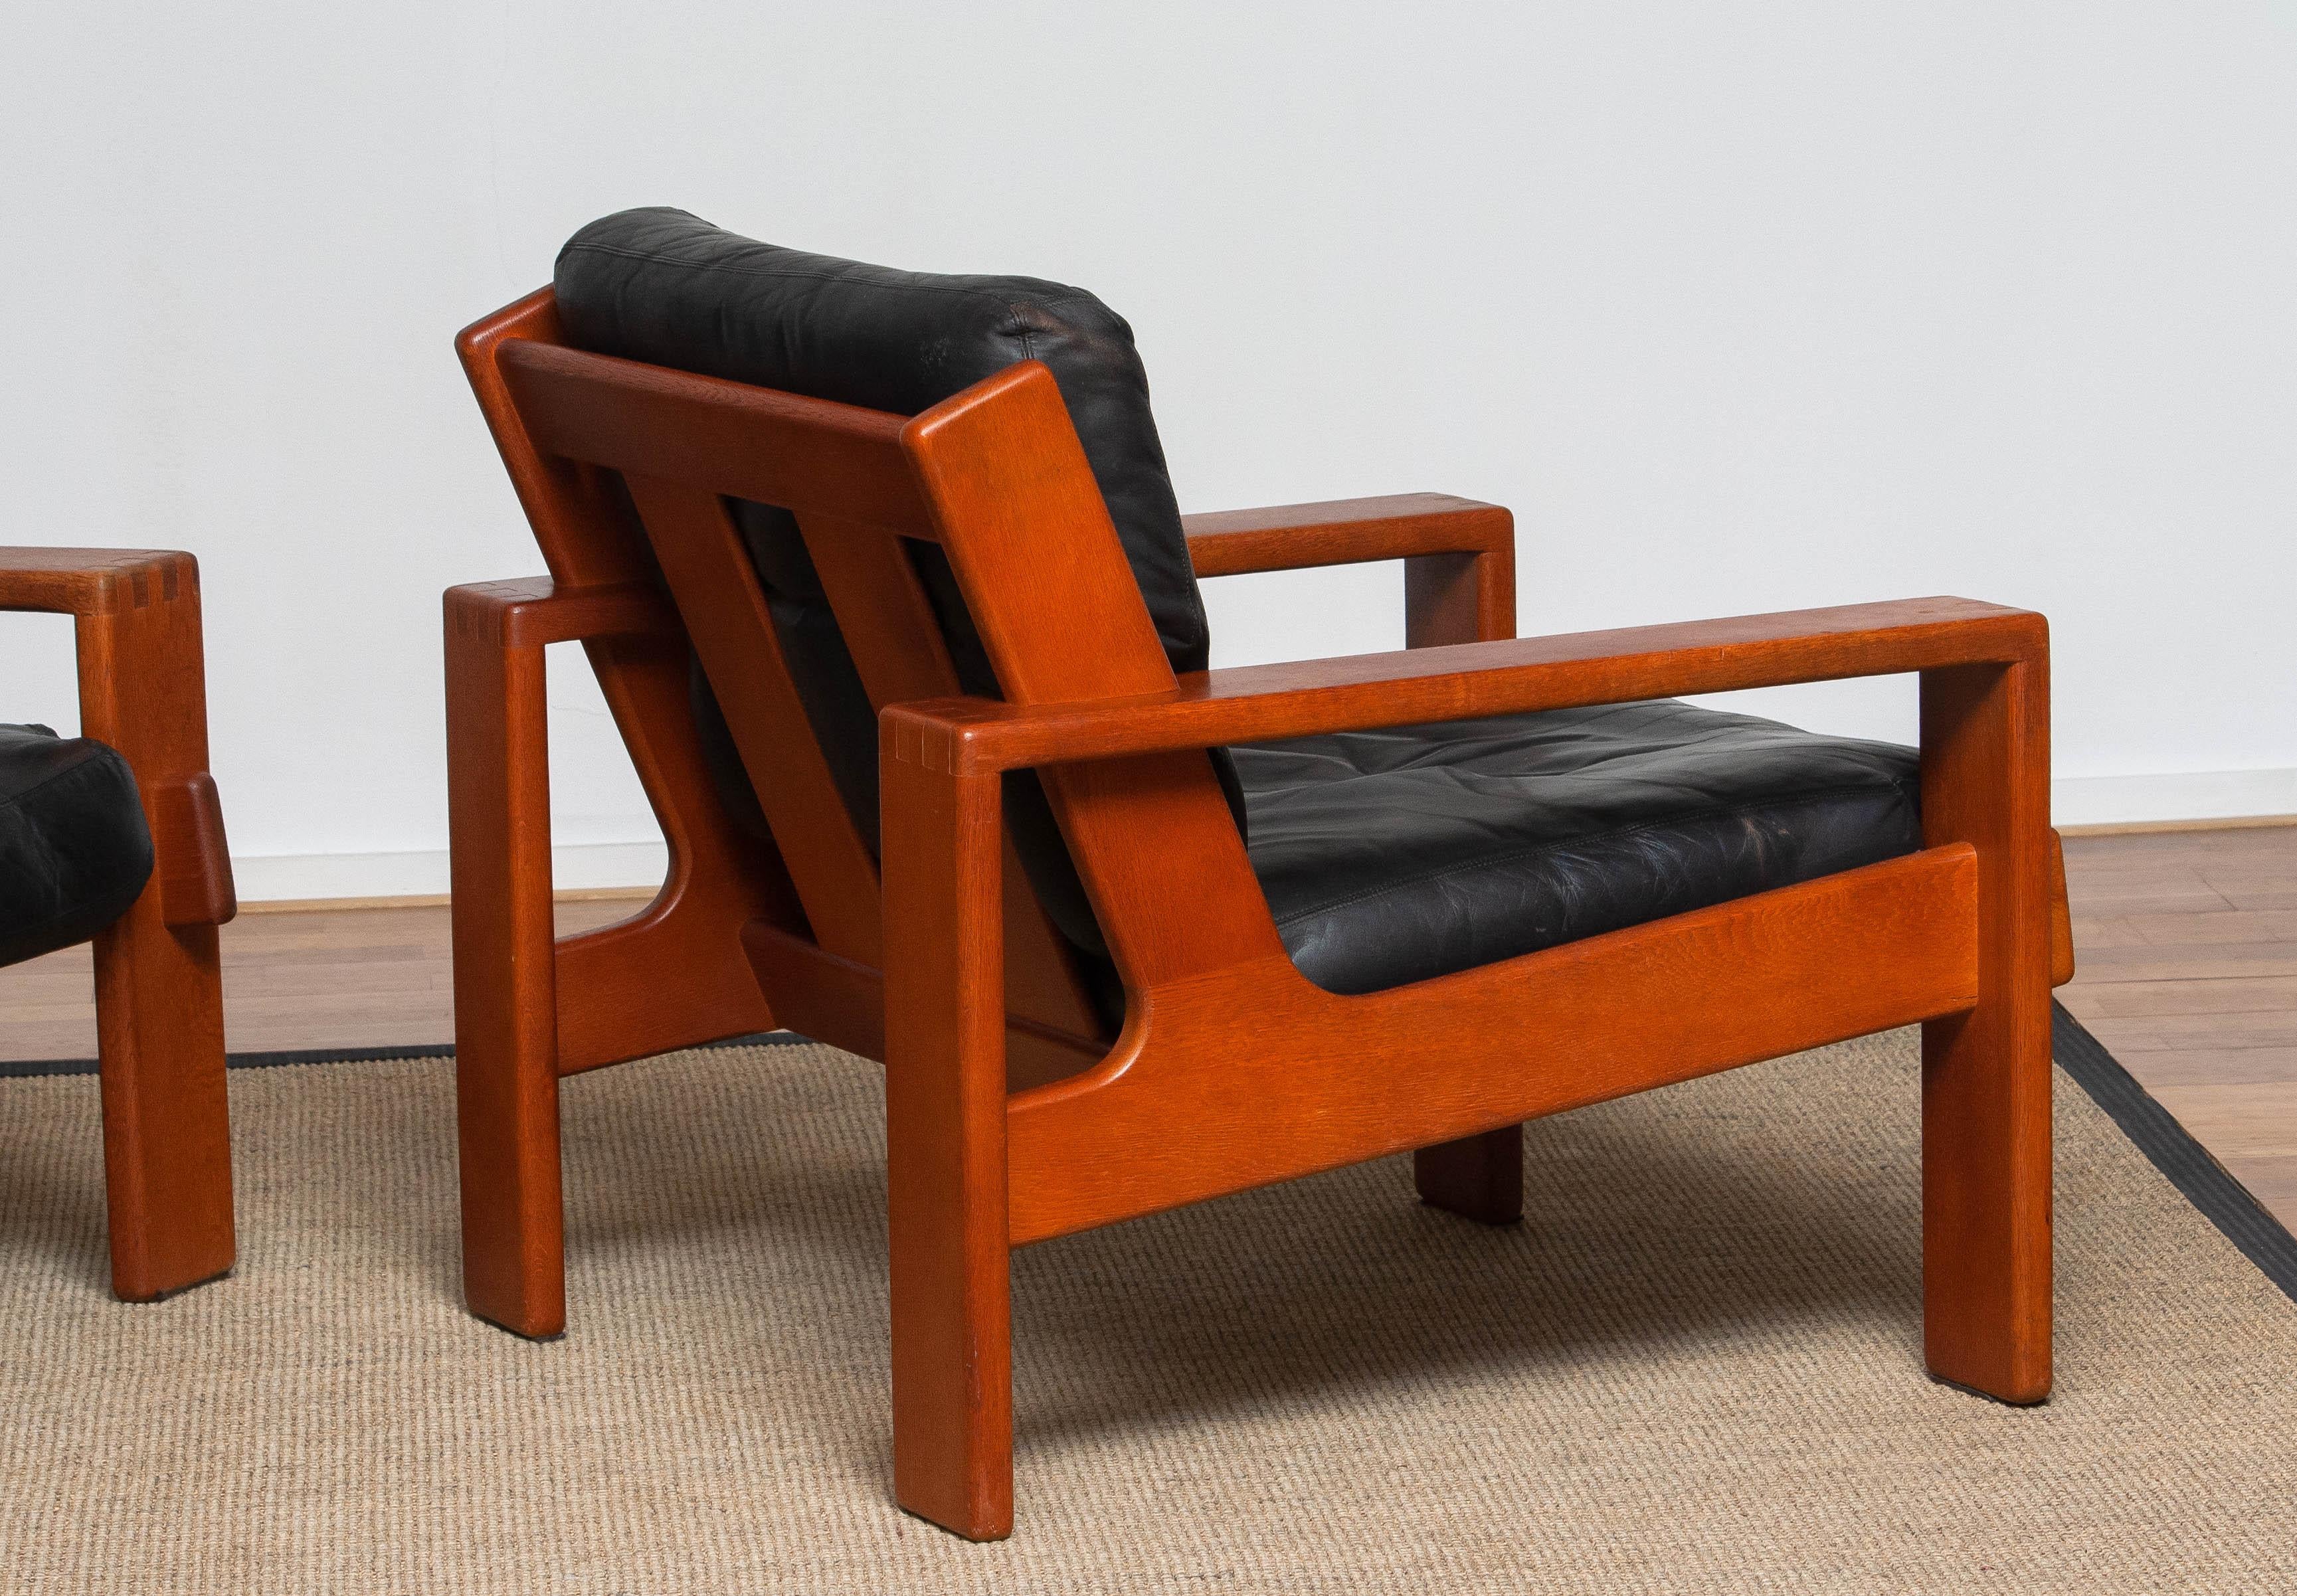 1960 Pair Teak and Black Leather Cubist Lounge Chair by Esko Pajamies for Asko 2